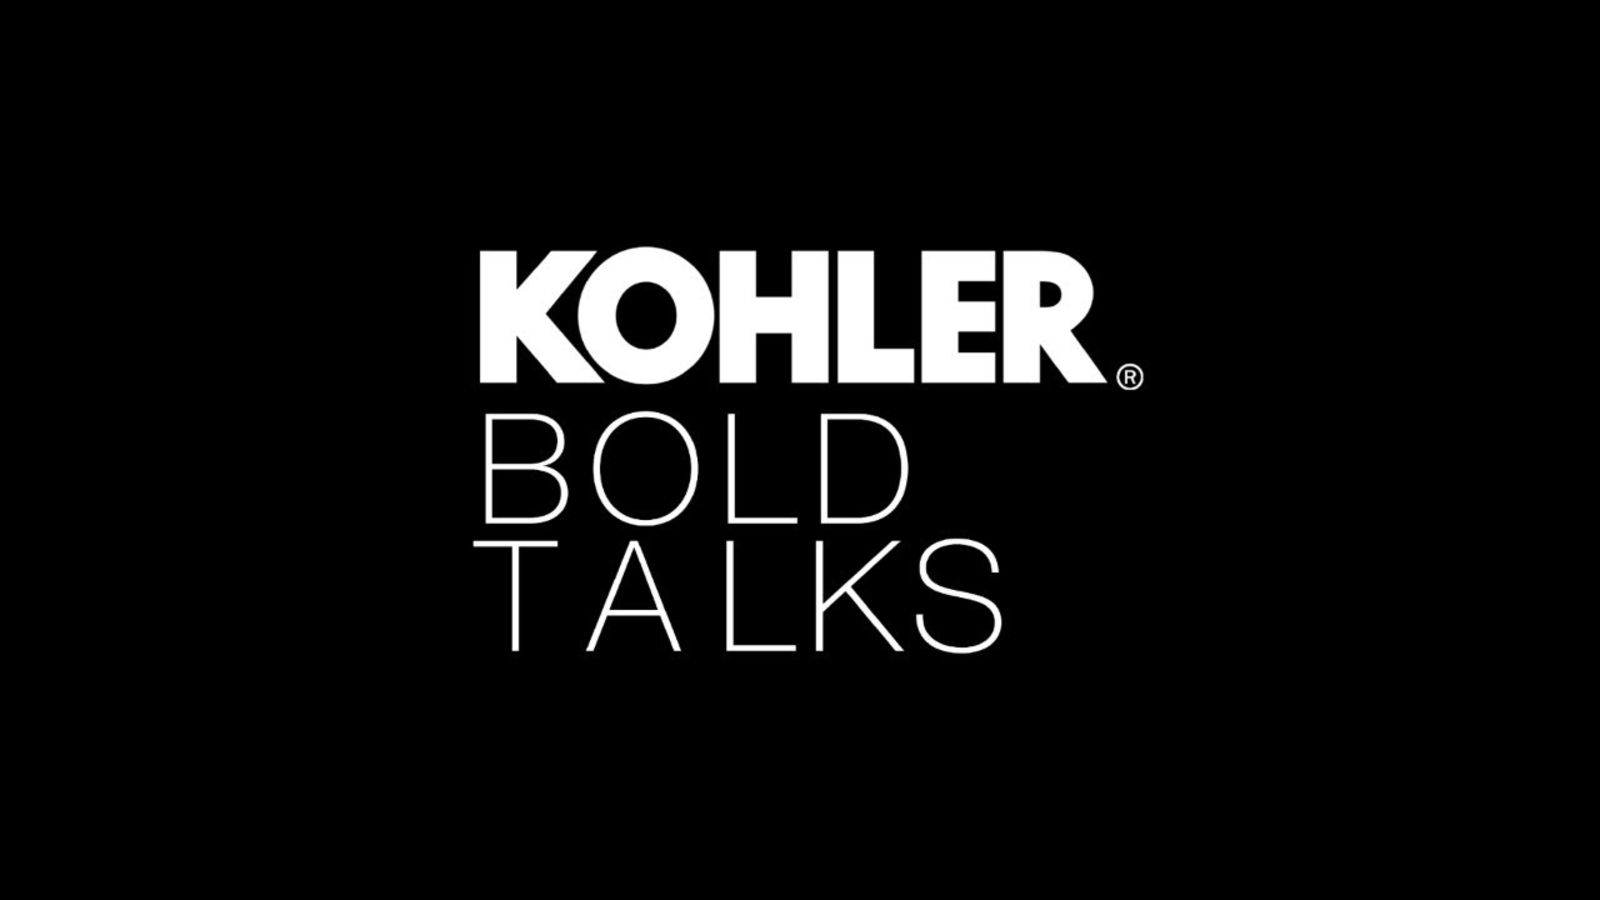 Kohler Bold Talks with Shabnam Gupta and Abin Chaudhuri I Moderated by Madhav Raman